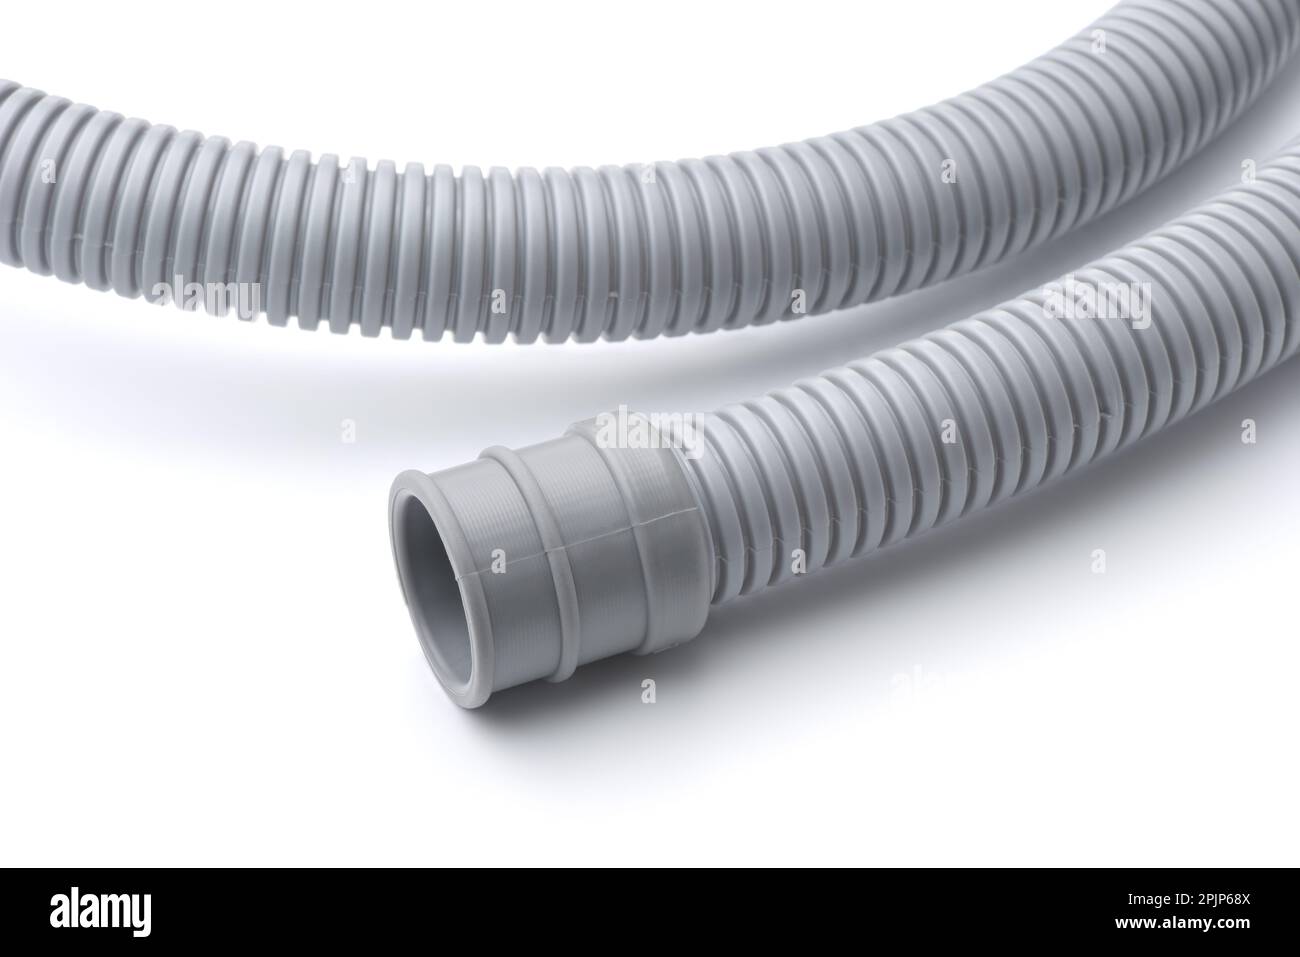 Closeup of gray plastic corrugated hose on white background Stock Photo